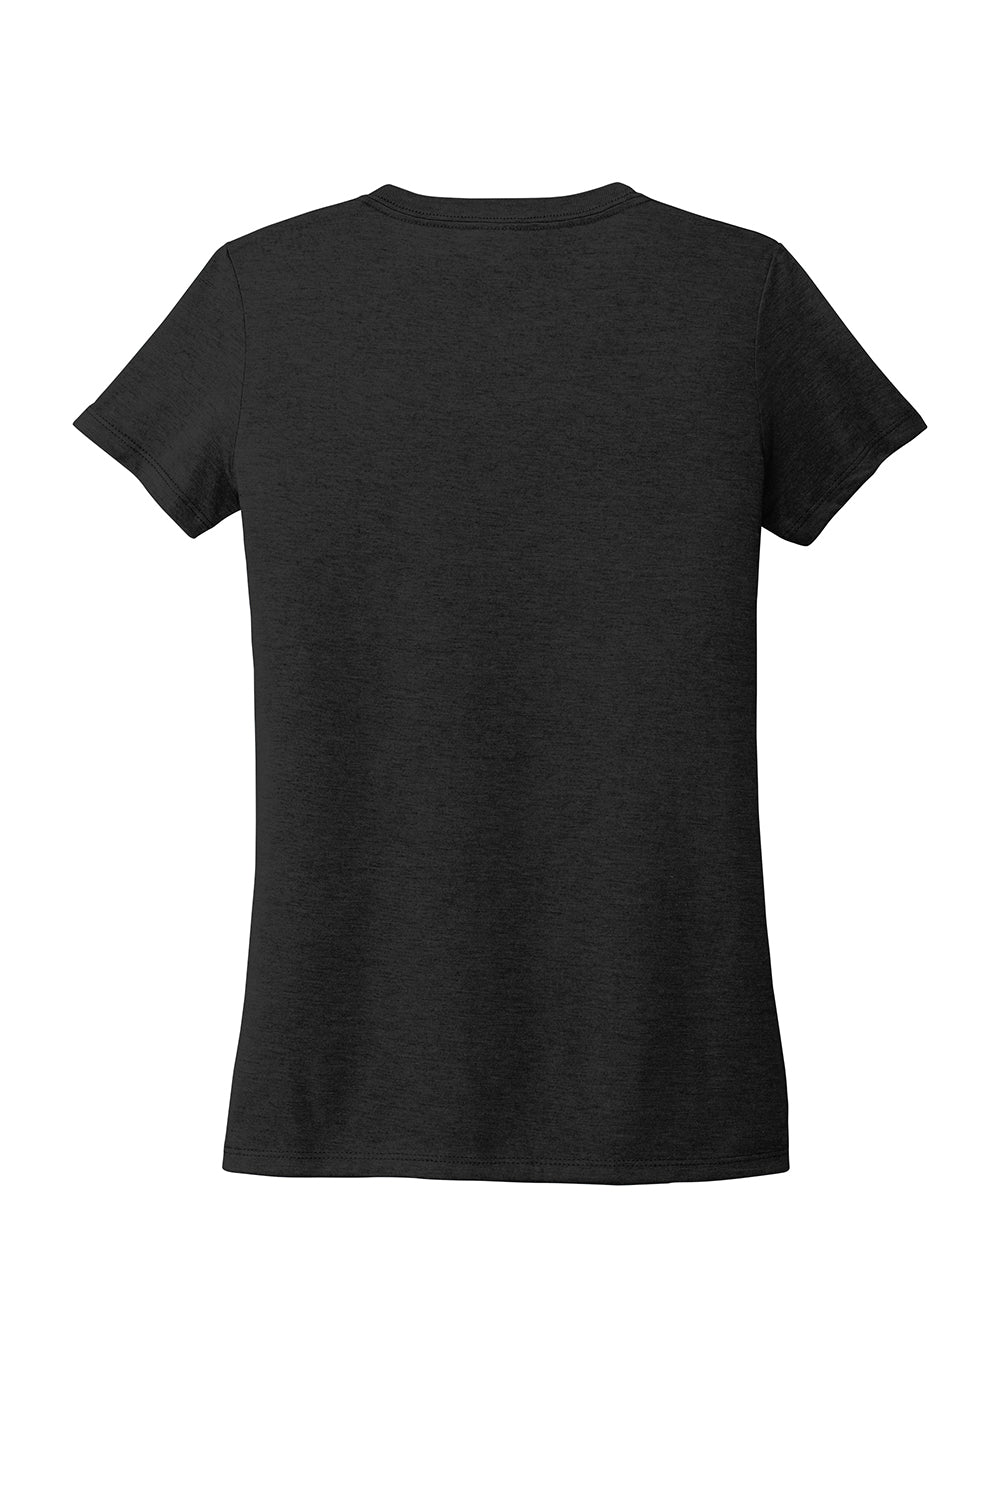 Allmade AL2018 Womens Short Sleeve V-Neck T-Shirt Space Black Flat Back